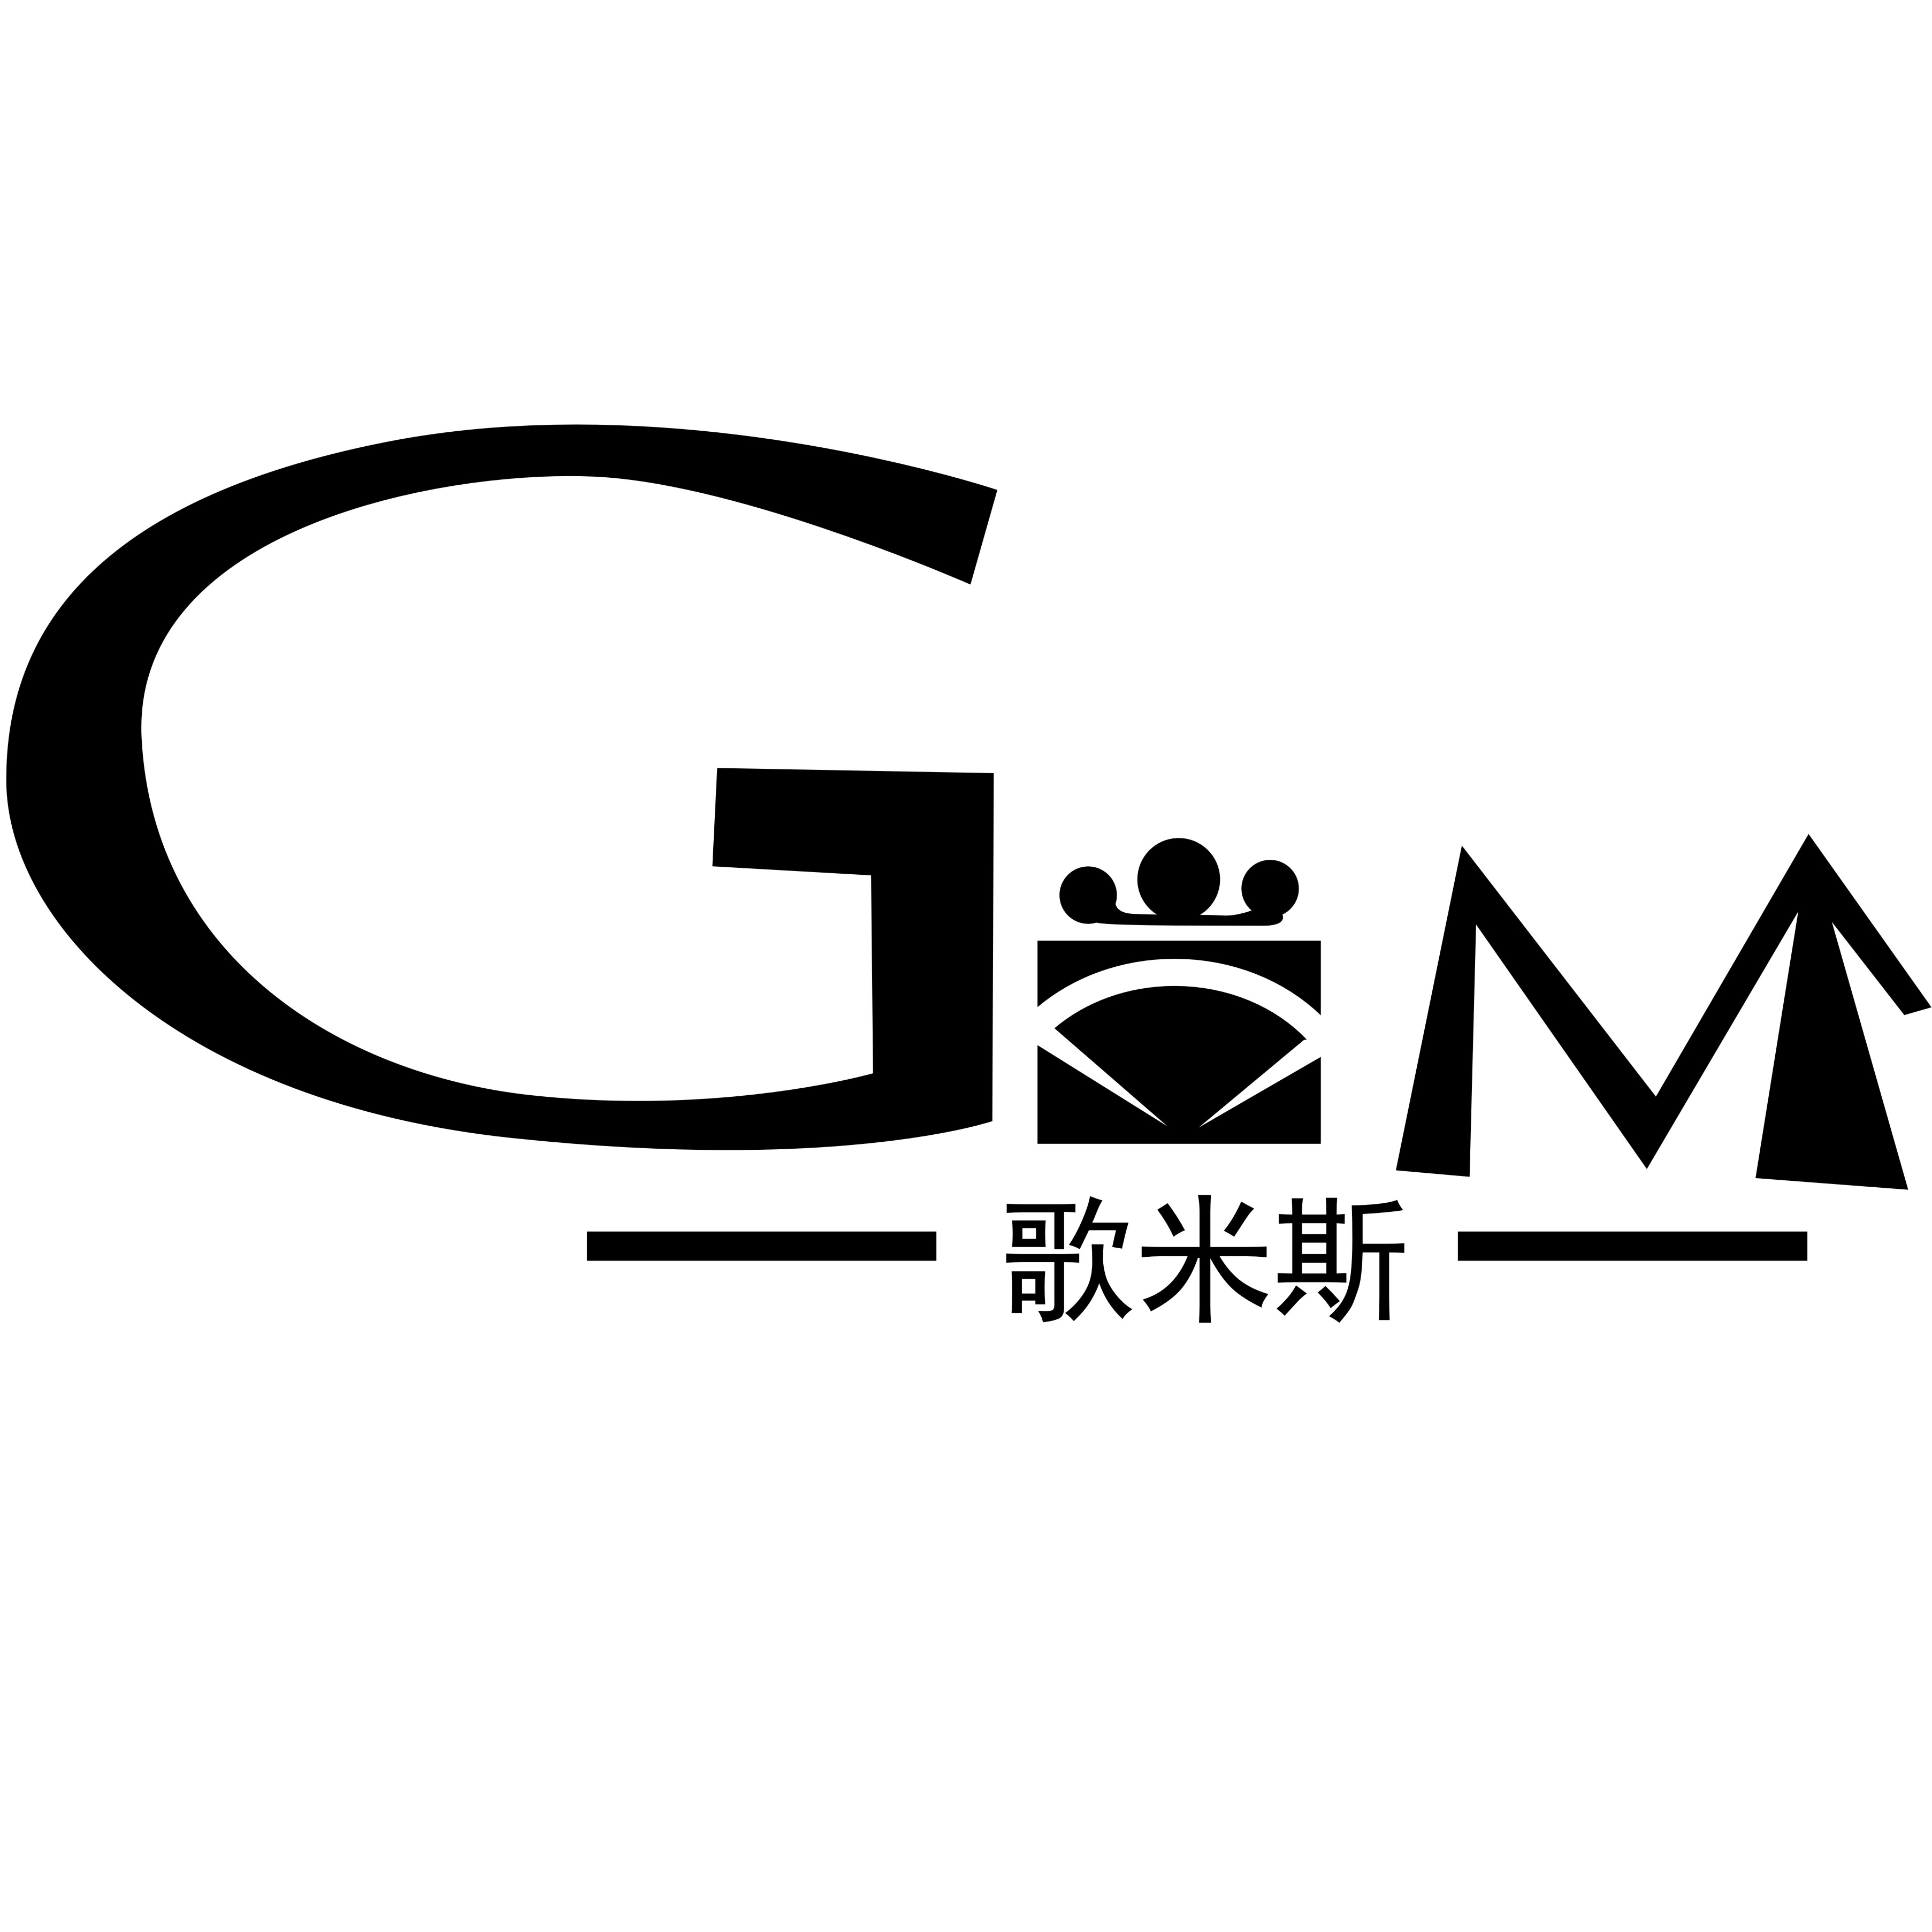 Guangzhou Grimiss Fashion Co.Ltd